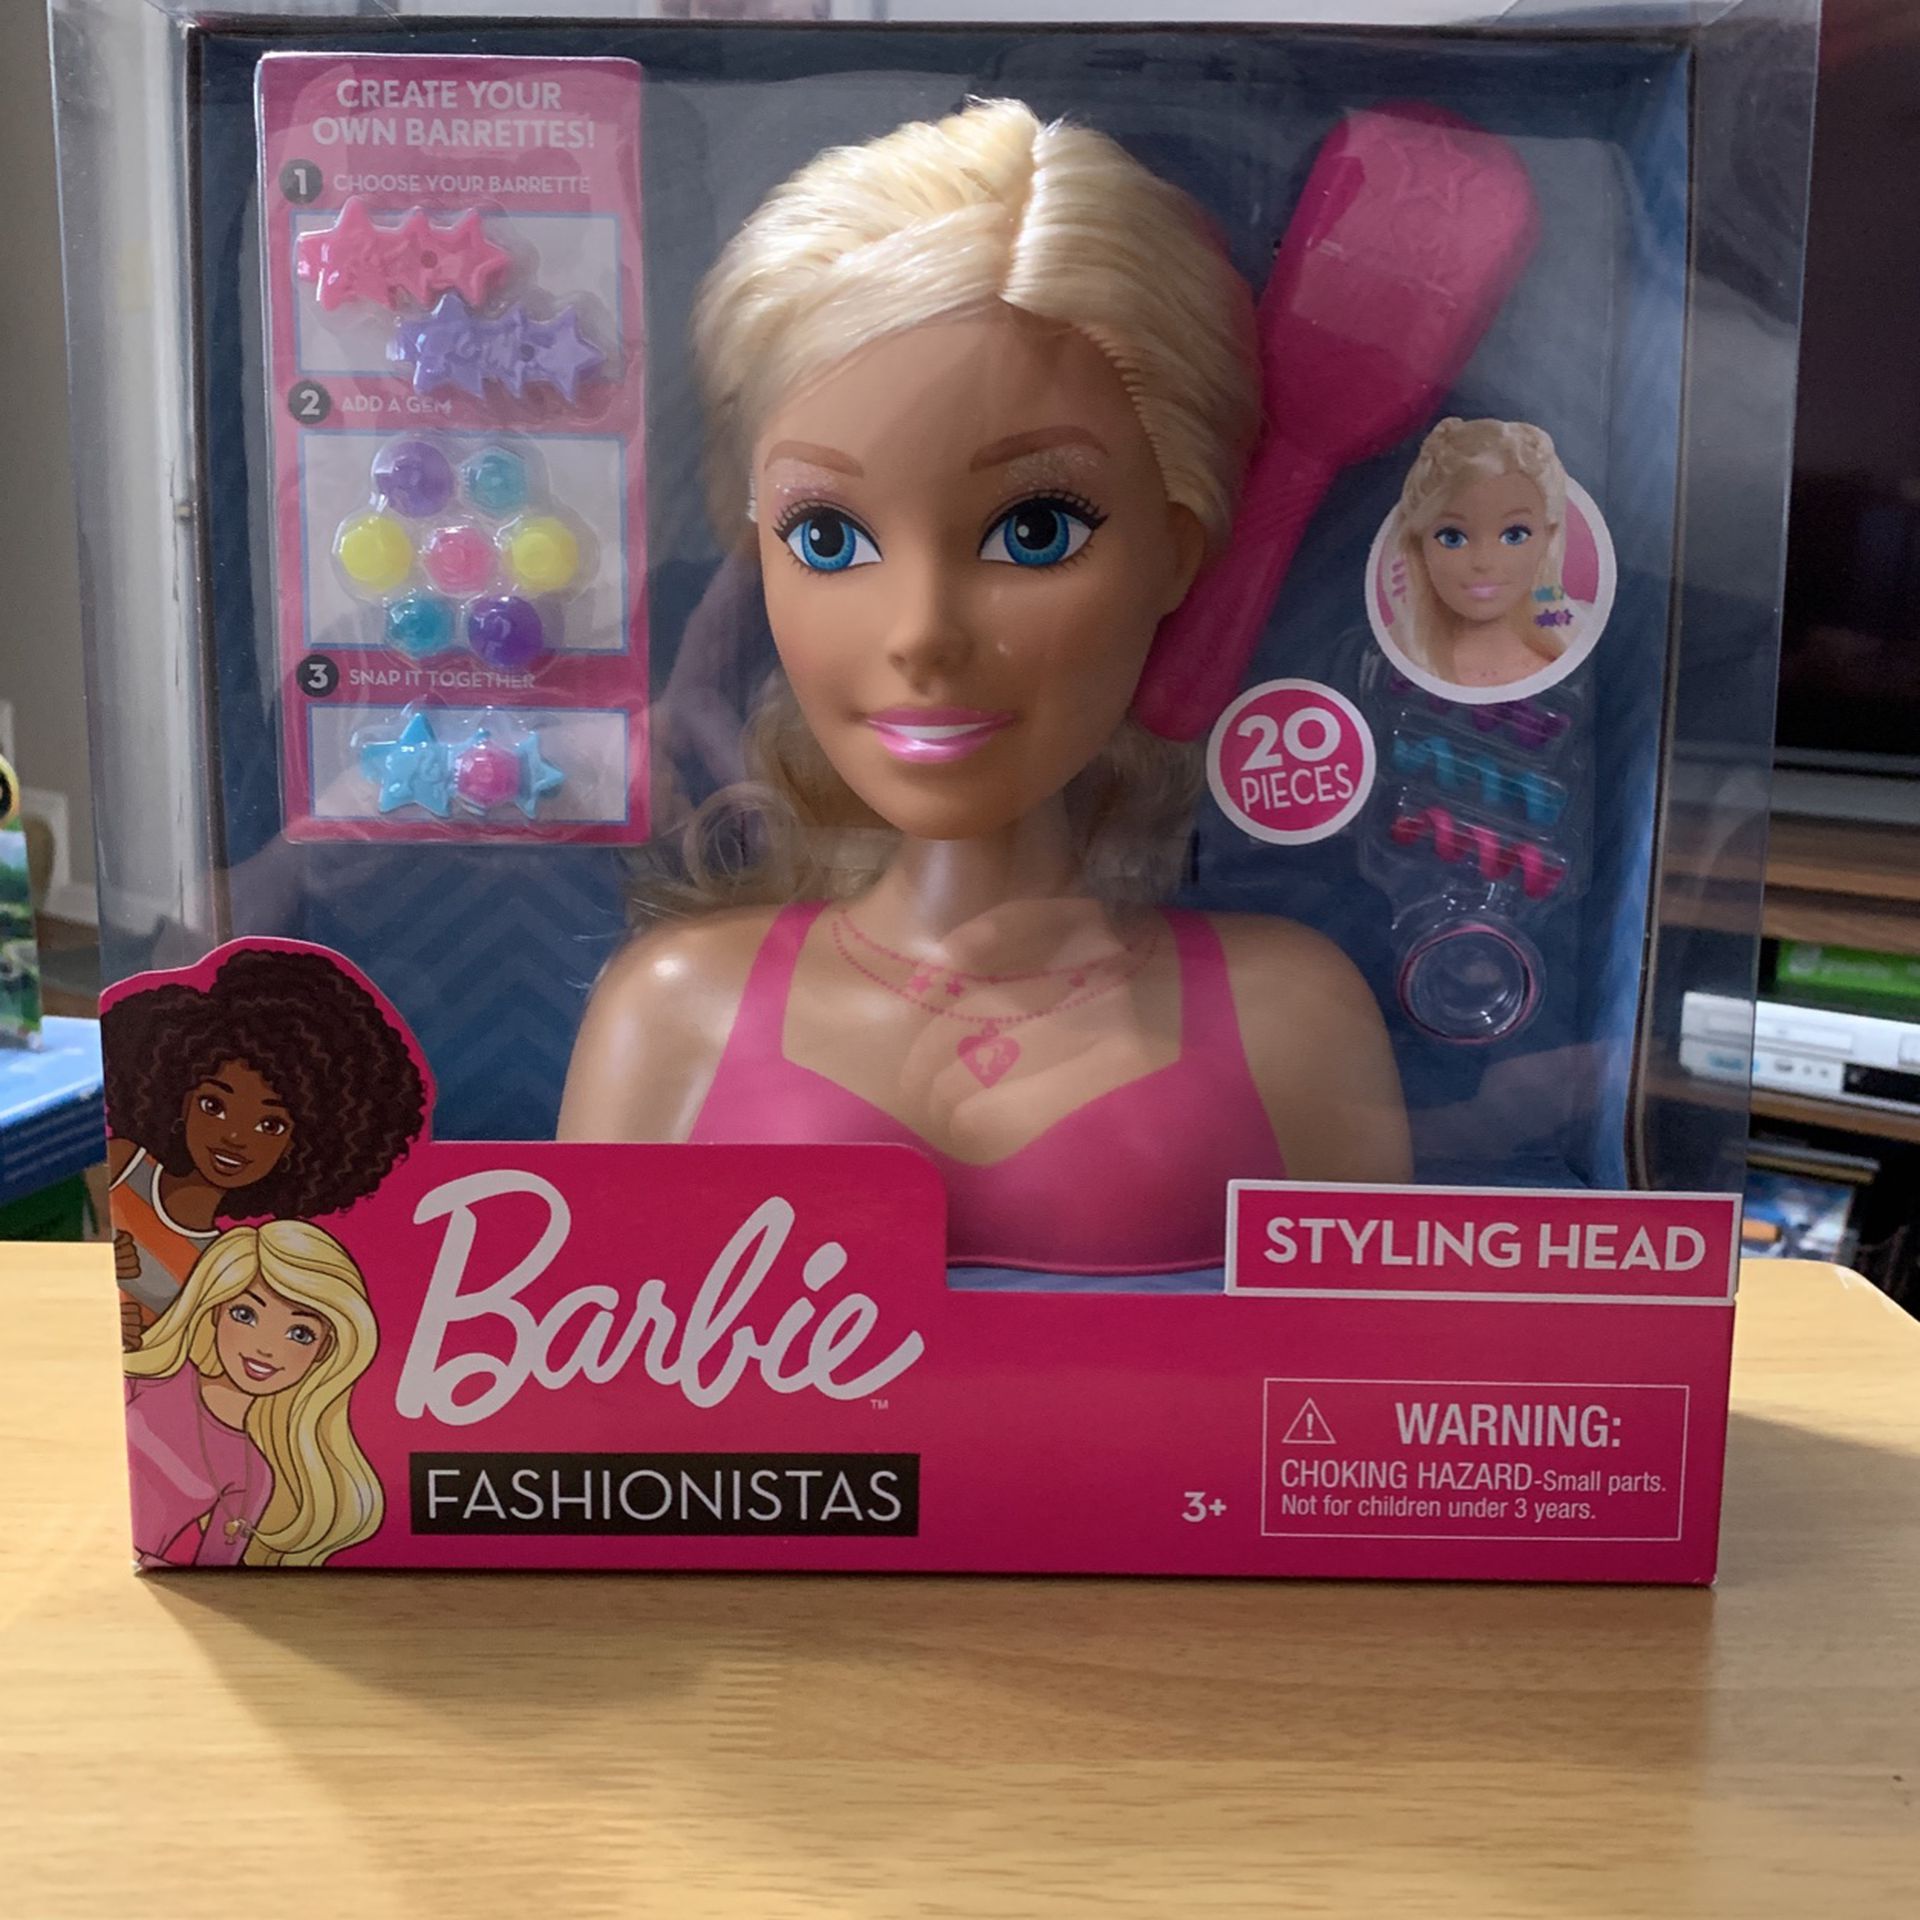 Barbie fashionistas styling head